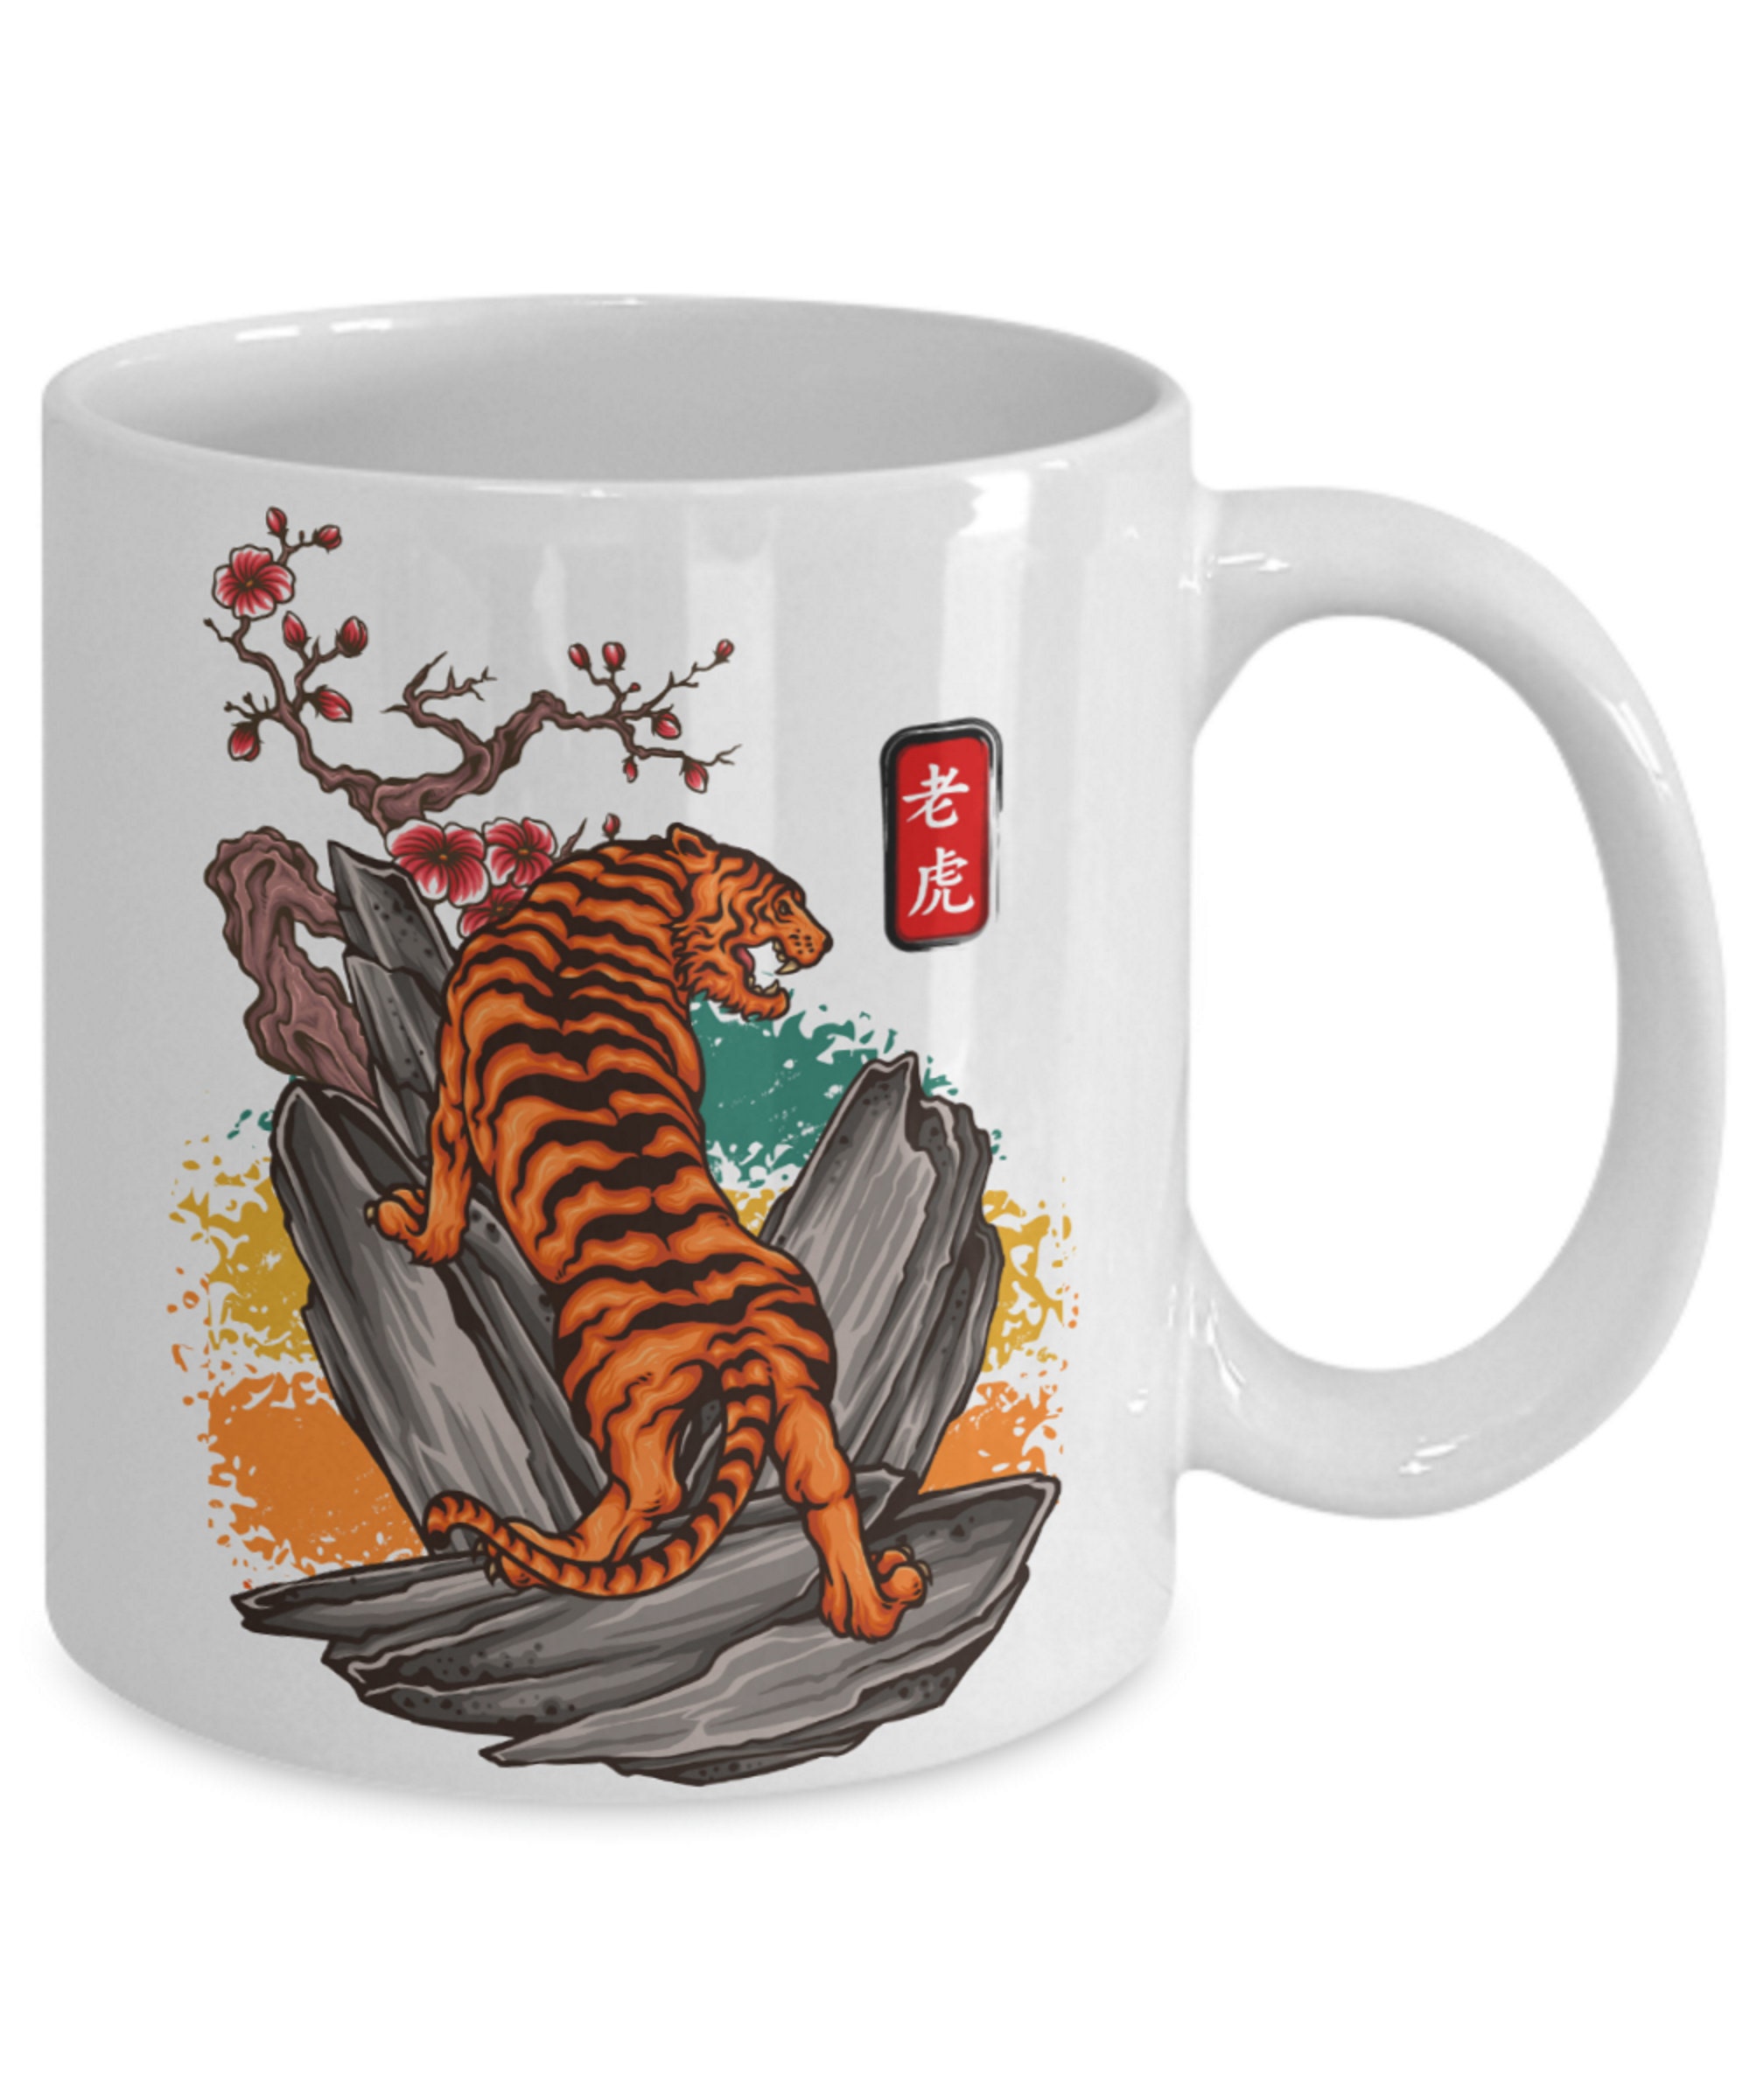 tasse tigre 2022 nouvel an chinois tasse à café tigre